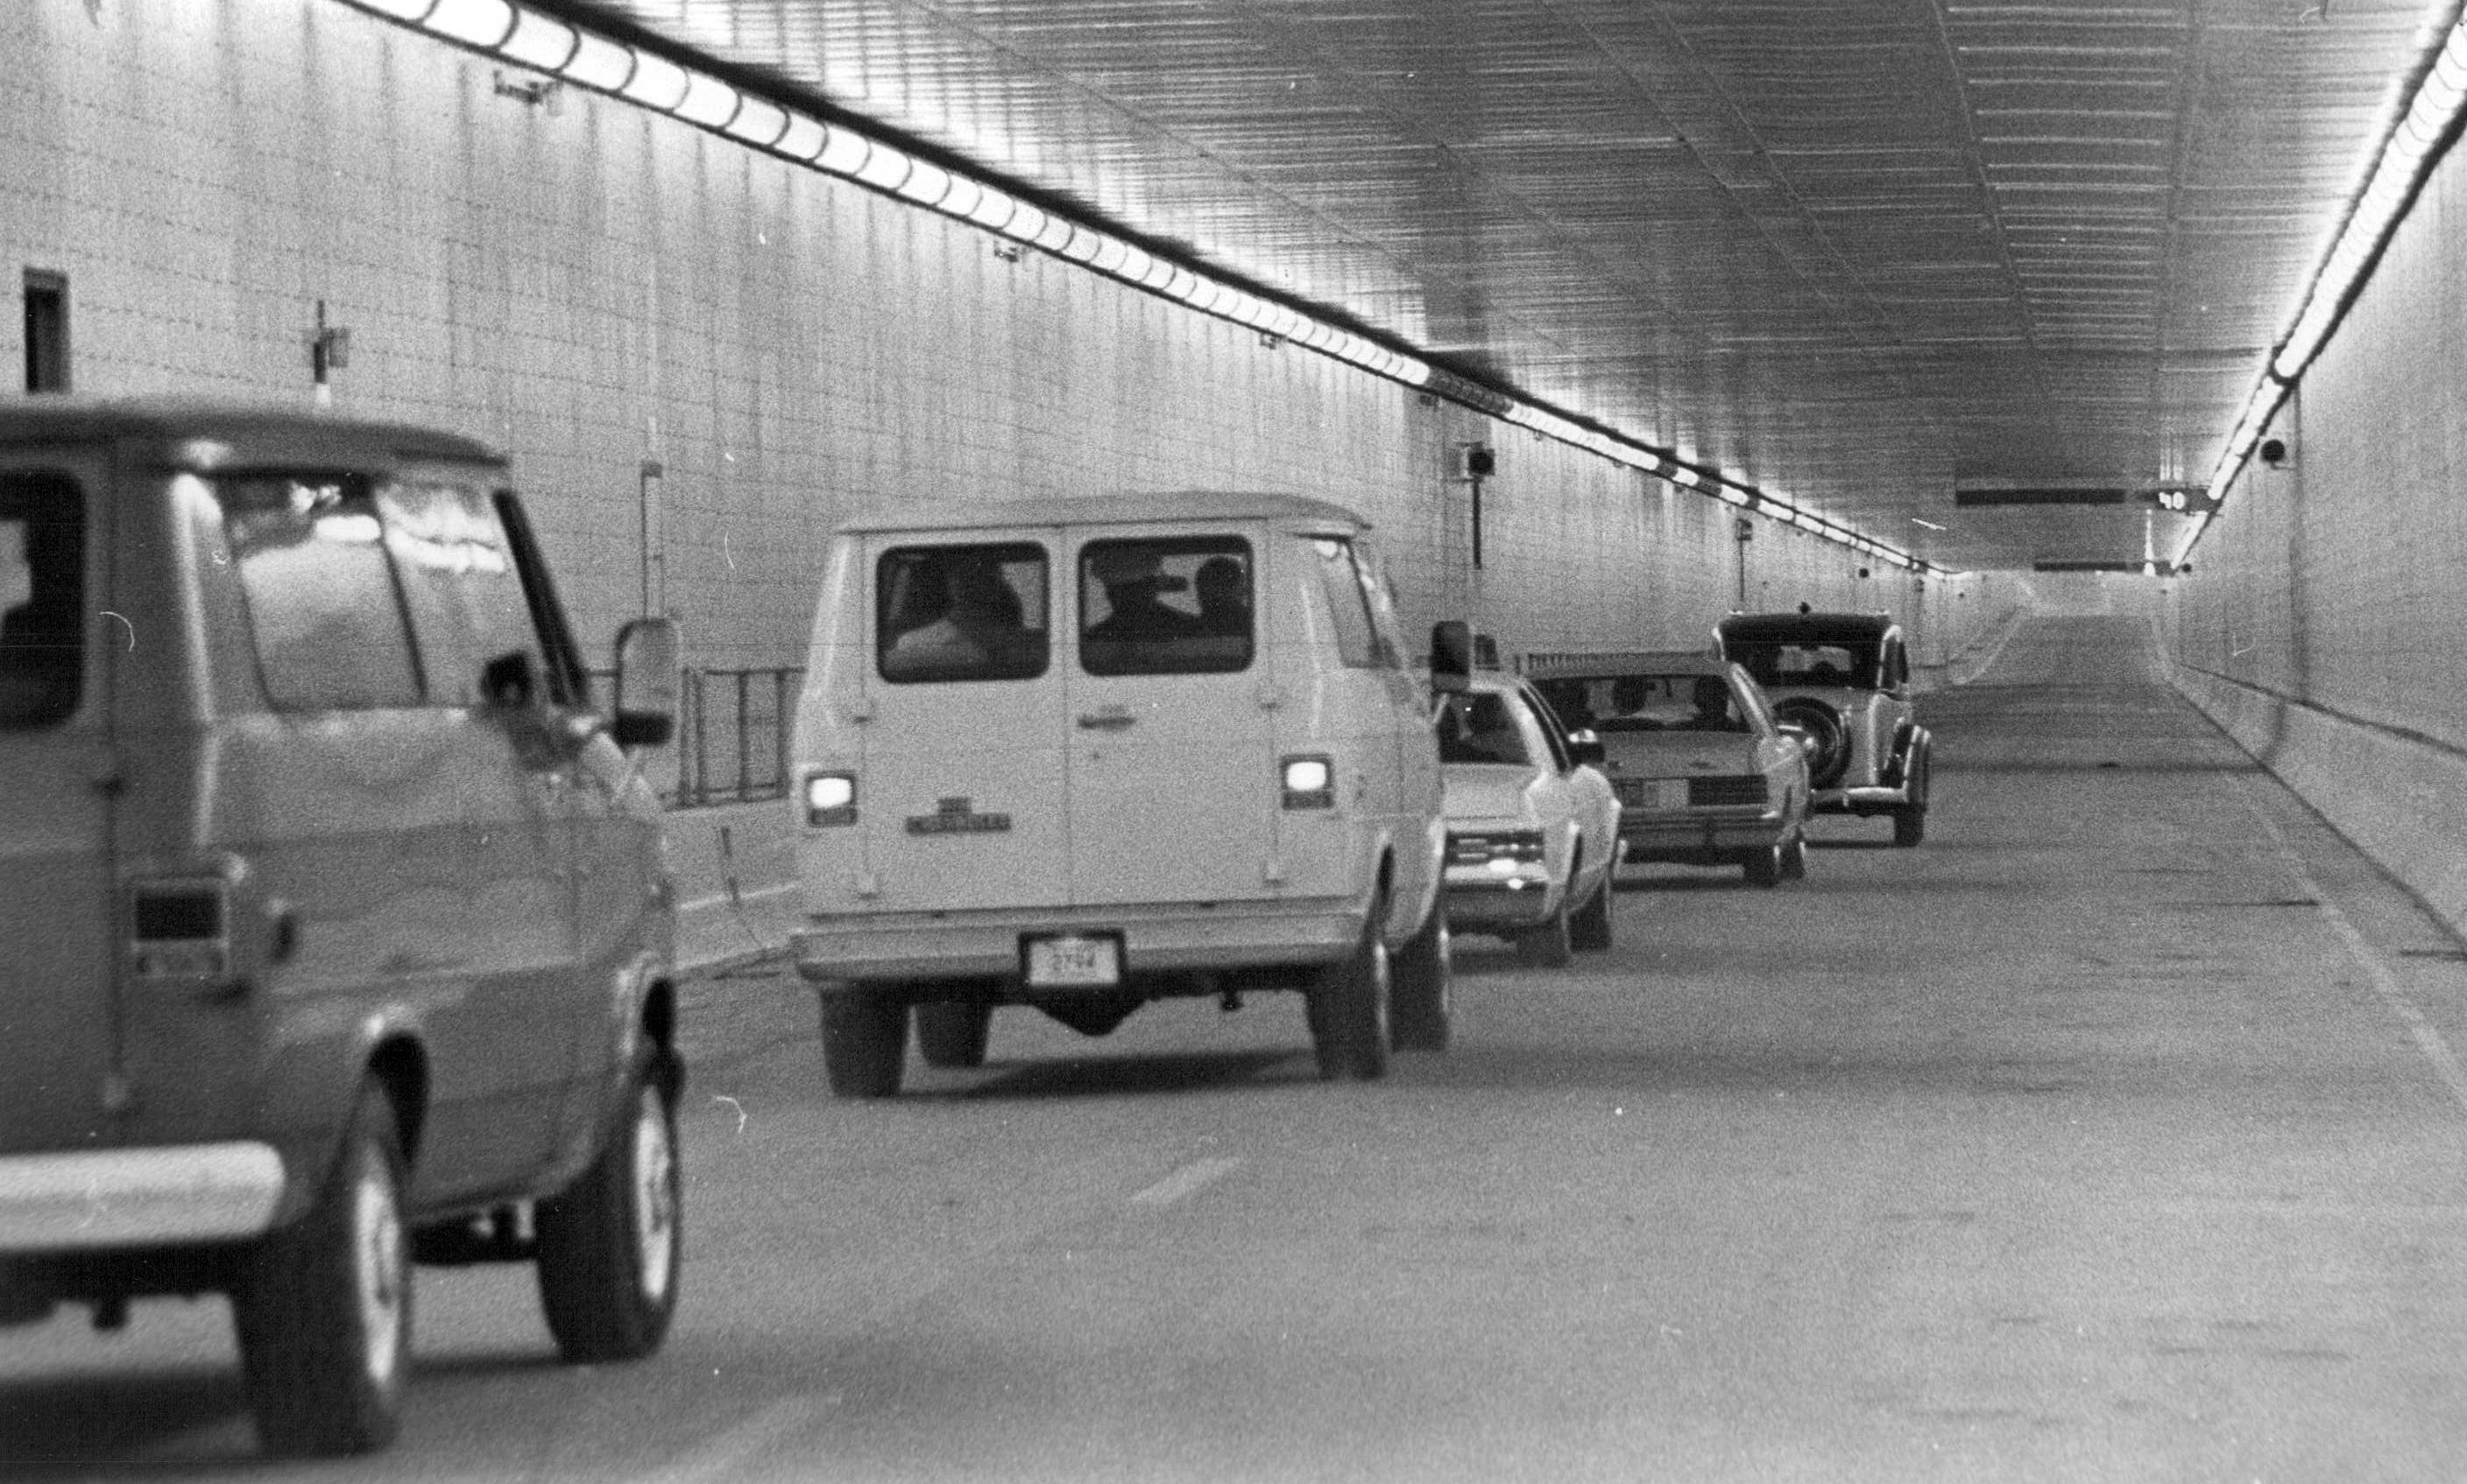 DEC 20 1979. DEC 21 1979, DEC 22 1979; Eisenhower, Dwight D., Memorial Tunnel; (Photo By Bill Peters/The Denver Post via Getty Images)